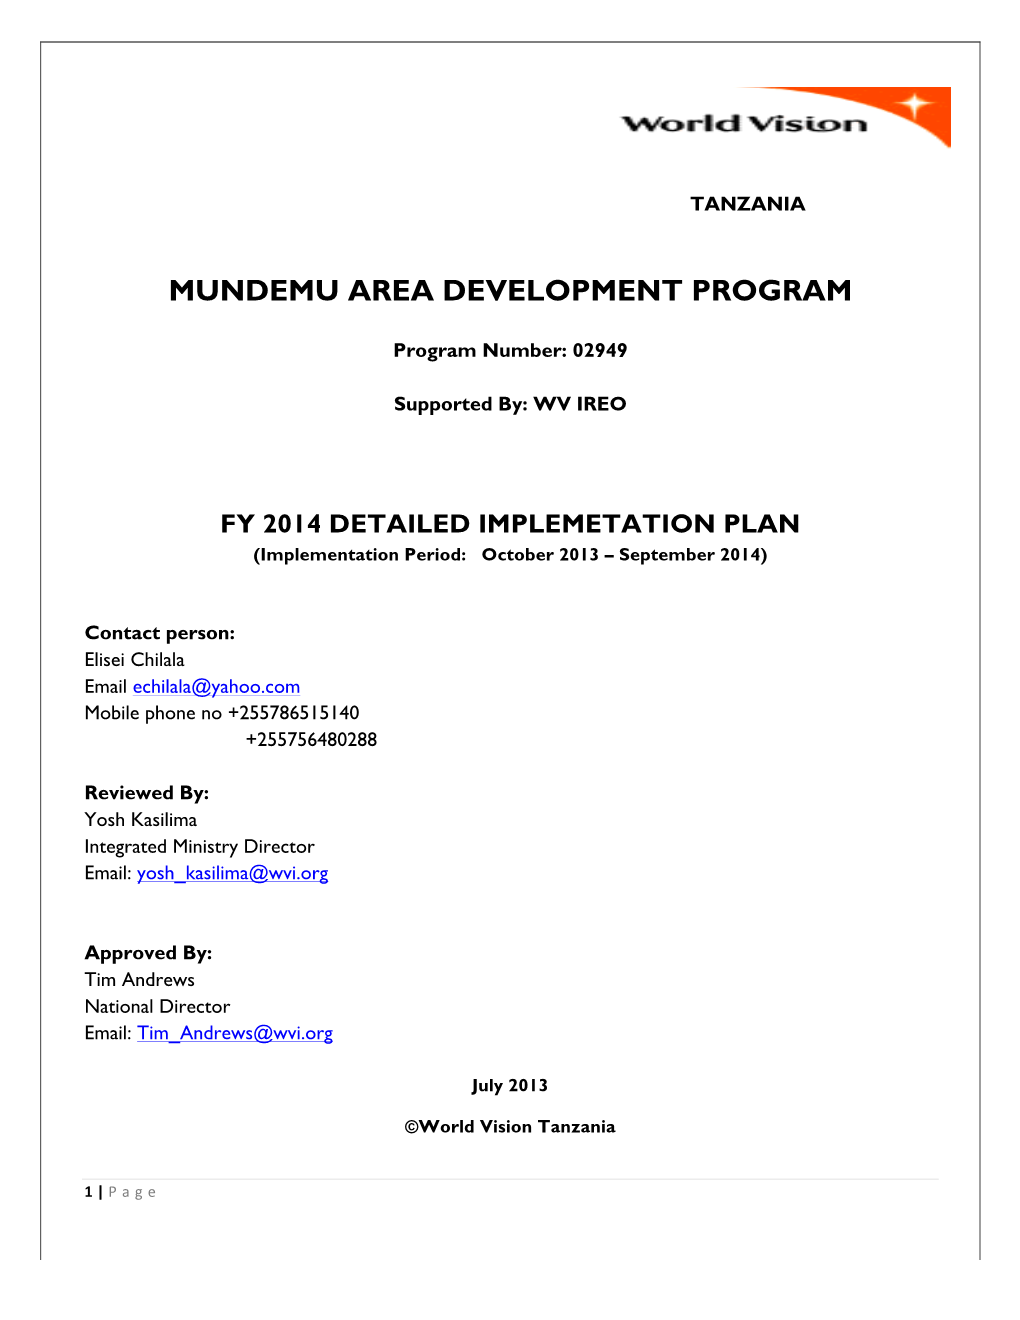 Mundemu Area Development Program